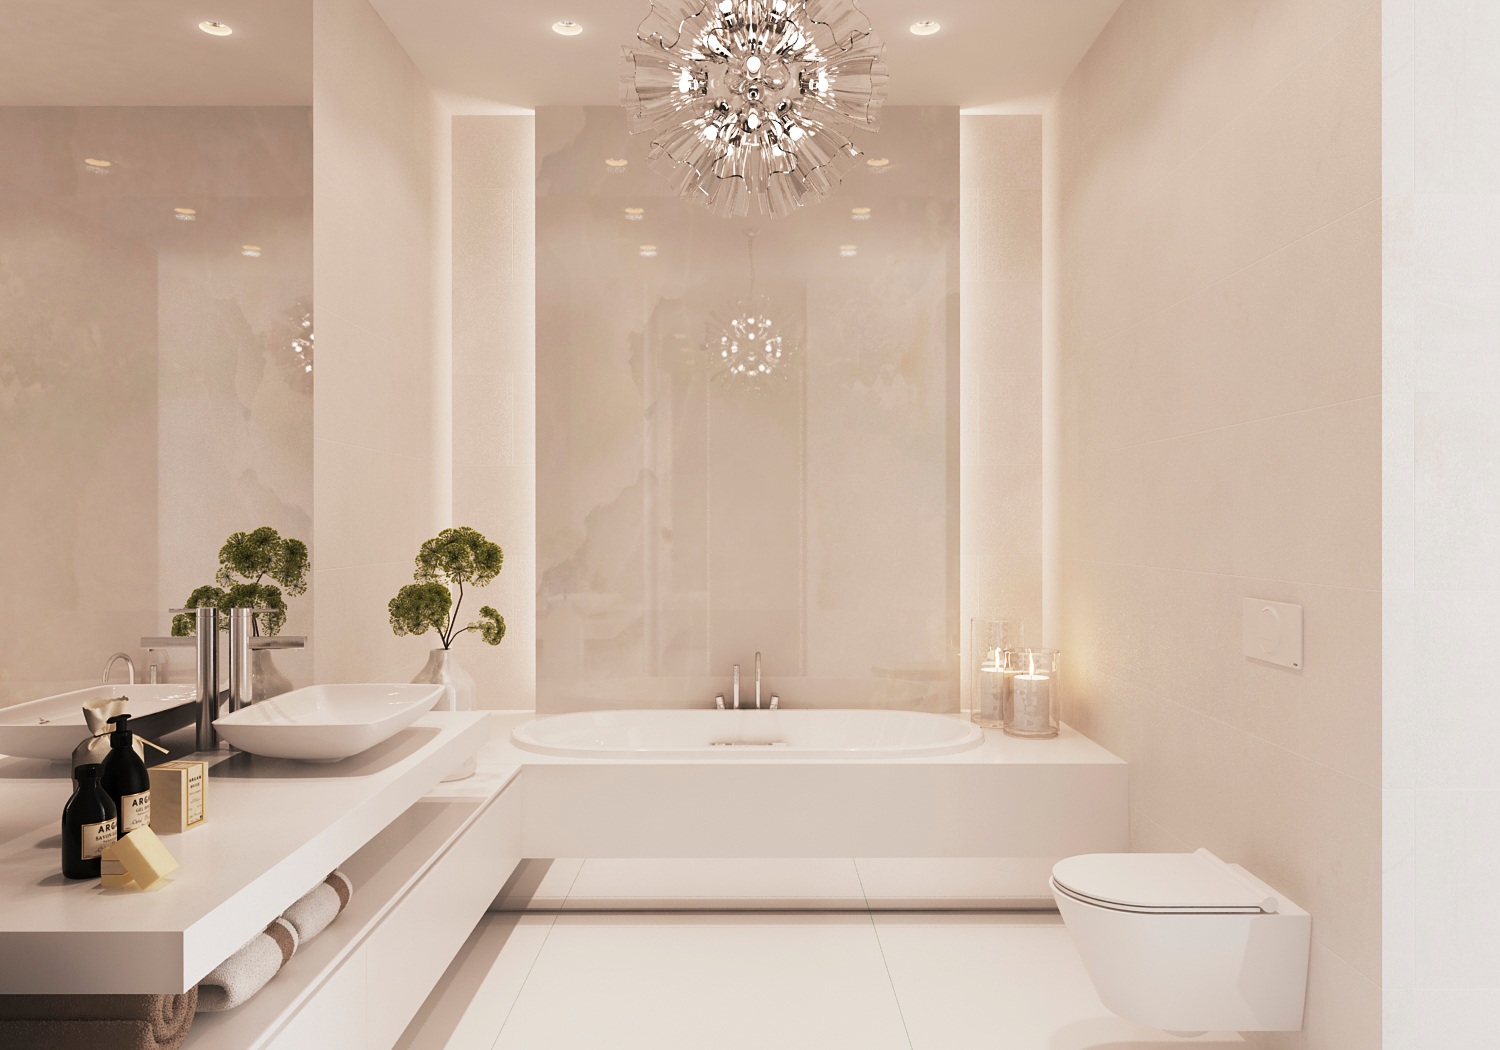 beautiful white bathroom "width =" 1500 "height =" 1050 "srcset =" https://mileray.com/wp-content/uploads/2020/05/1588515349_137_Decorating-Minimalist-Bathroom-Designs-Look-So-Beautiful-and-Modern-With.jpg 1500w, https: //mileray.com/wp-content/uploads/2016/09/lovely-white-bathroom-Workshop-Art-300x210.jpg 300w, https://mileray.com/wp-content/uploads/2016/09/lovely -white-bad-Workshop-Art-768x538.jpg 768w, https://mileray.com/wp-content/uploads/2016/09/lovely-white-bathroom-Workshop-Art-1024x717.jpg 1024w, https: / /mileray.com/wp-content/uploads/2016/09/lovely-white-bathroom-Workshop-Art-100x70.jpg 100w, https://mileray.com/wp-content/uploads/2016/09/lovely- white-bathroom-workshop-art-696x487.jpg 696w, https://mileray.com/wp-content/uploads/2016/09/lovely-white-bathroom-Workshop-Art-1068x748.jpg 1068w, https: // mileray.com/wp-content/uploads/2016/09/lovely-white-bathroom-Workshop-Art-600x420.jpg 600w "sizes =" (maximum width: 1500px) 100vw, 1500px